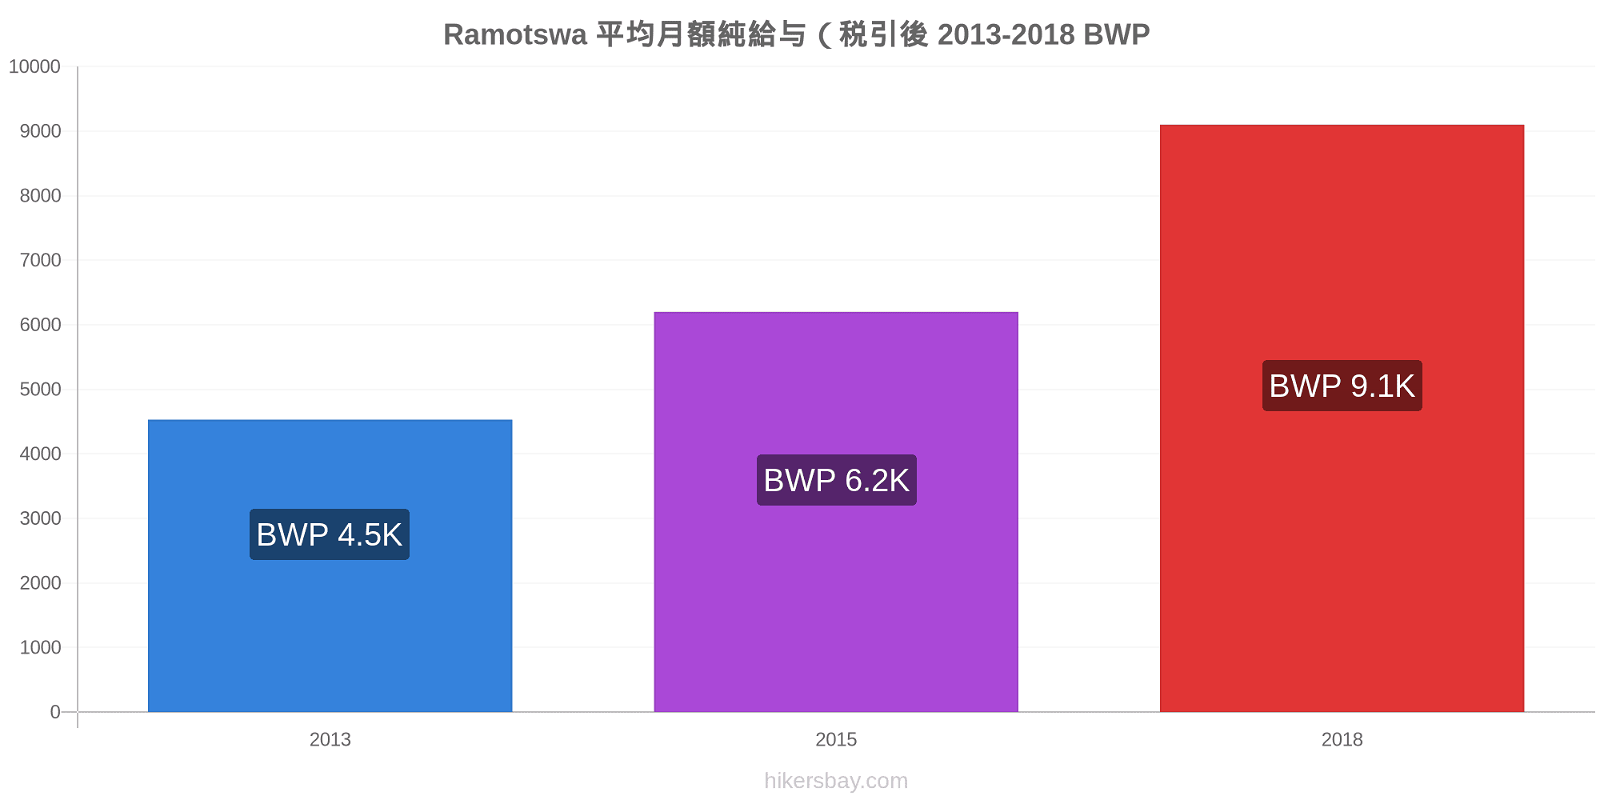 Ramotswa 価格変更 純平均月給 (税引後) hikersbay.com